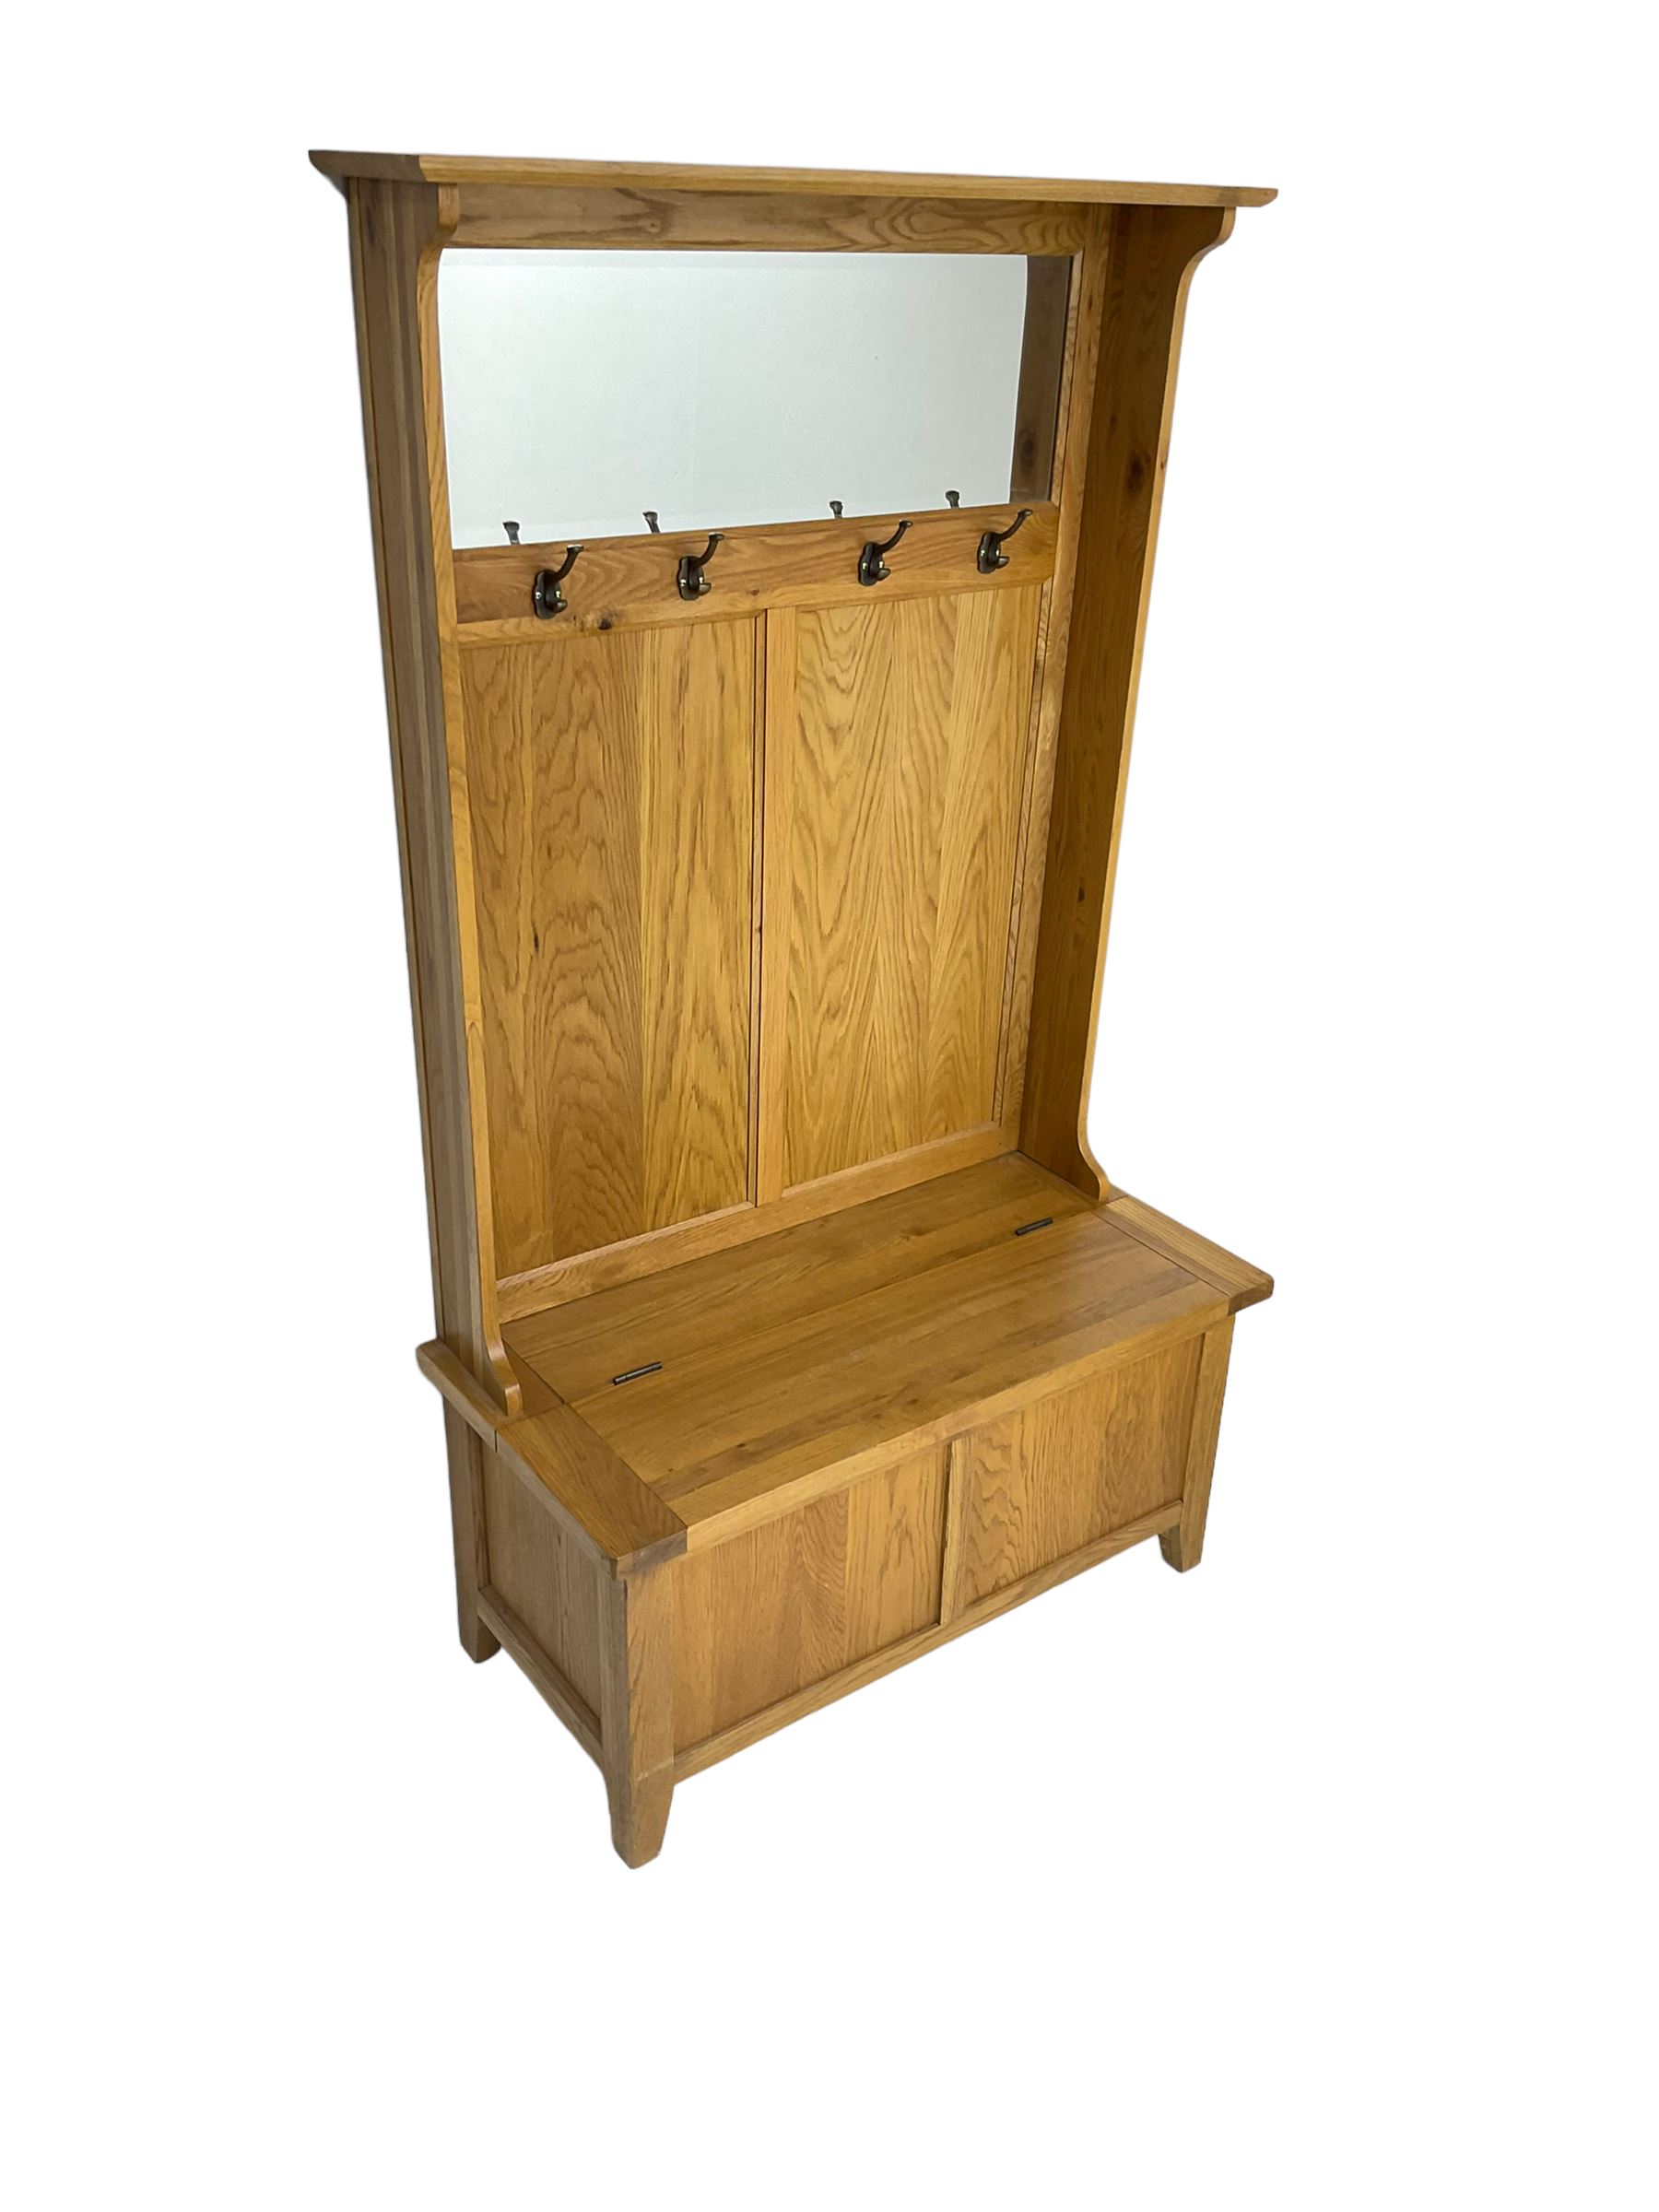 Oak mirror-back hall bench - Image 2 of 5